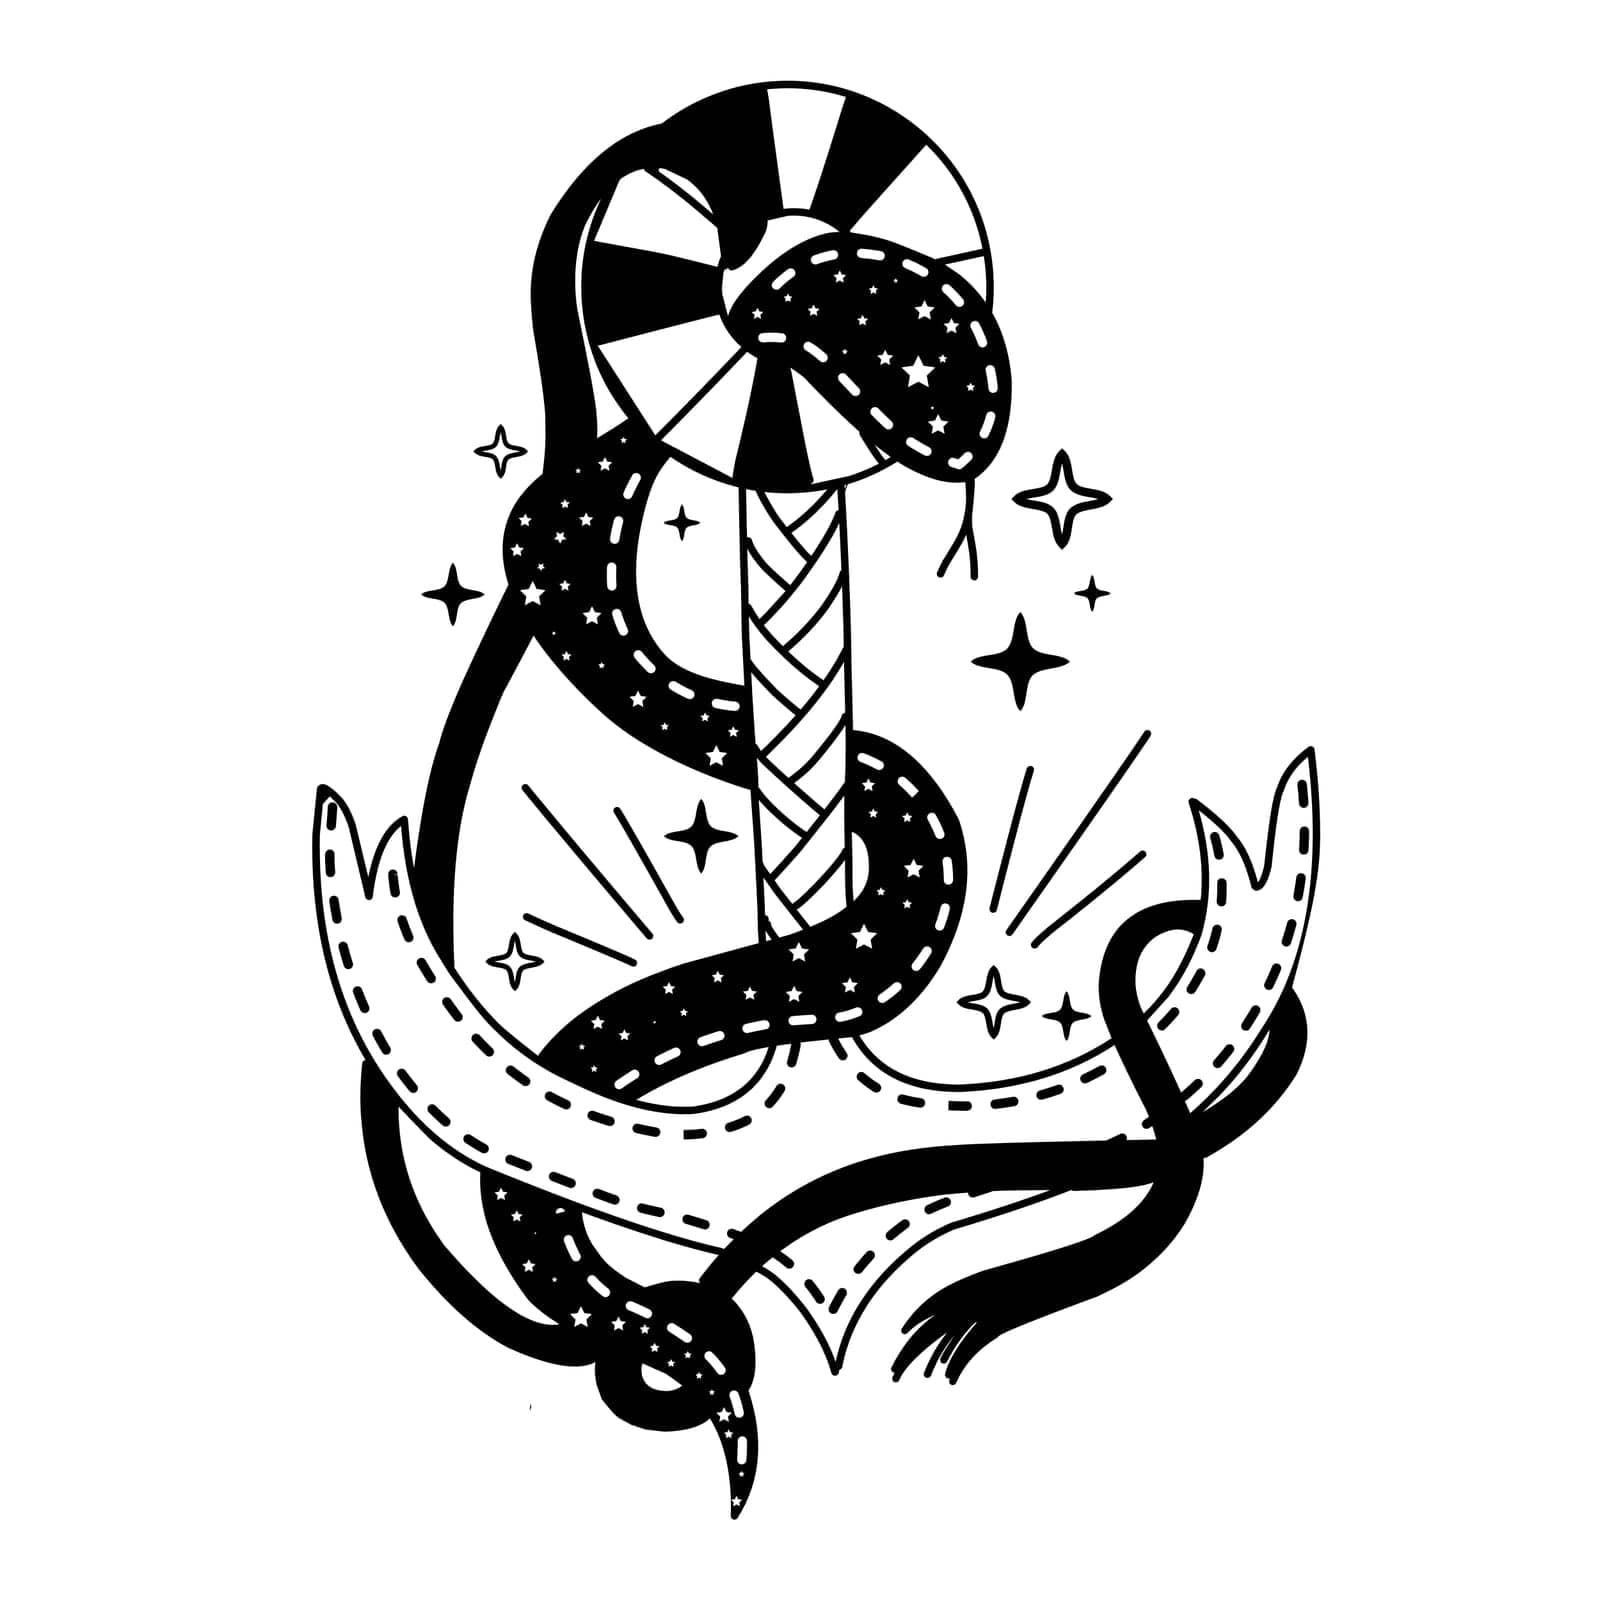 old school tattoo. Anchor. Sea snake. A snake wraps around an anchor.astrology tattoo style by annatarankova